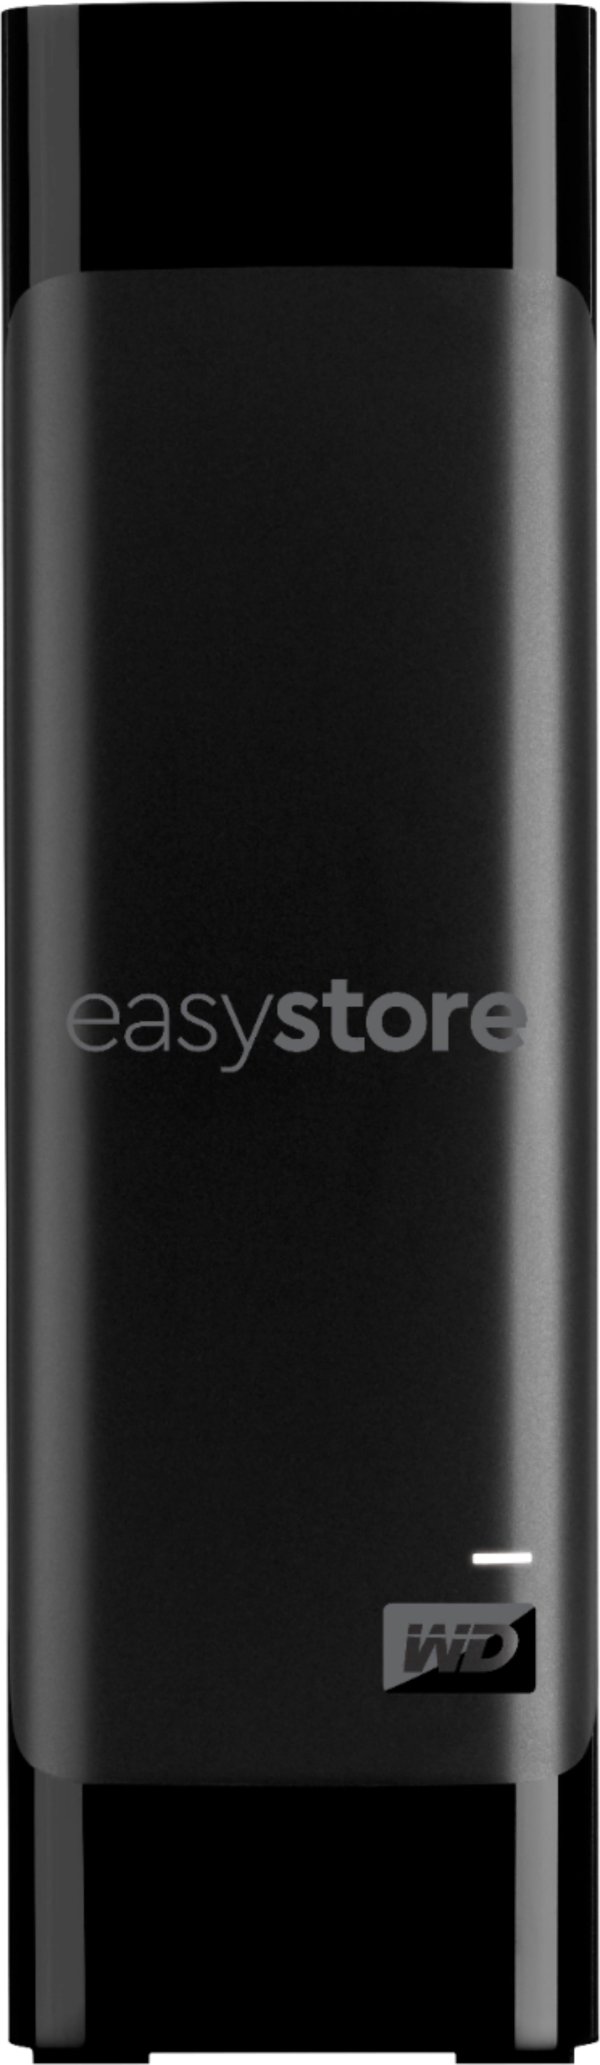 WD easystore 18TB USB 3.0 外置硬盘